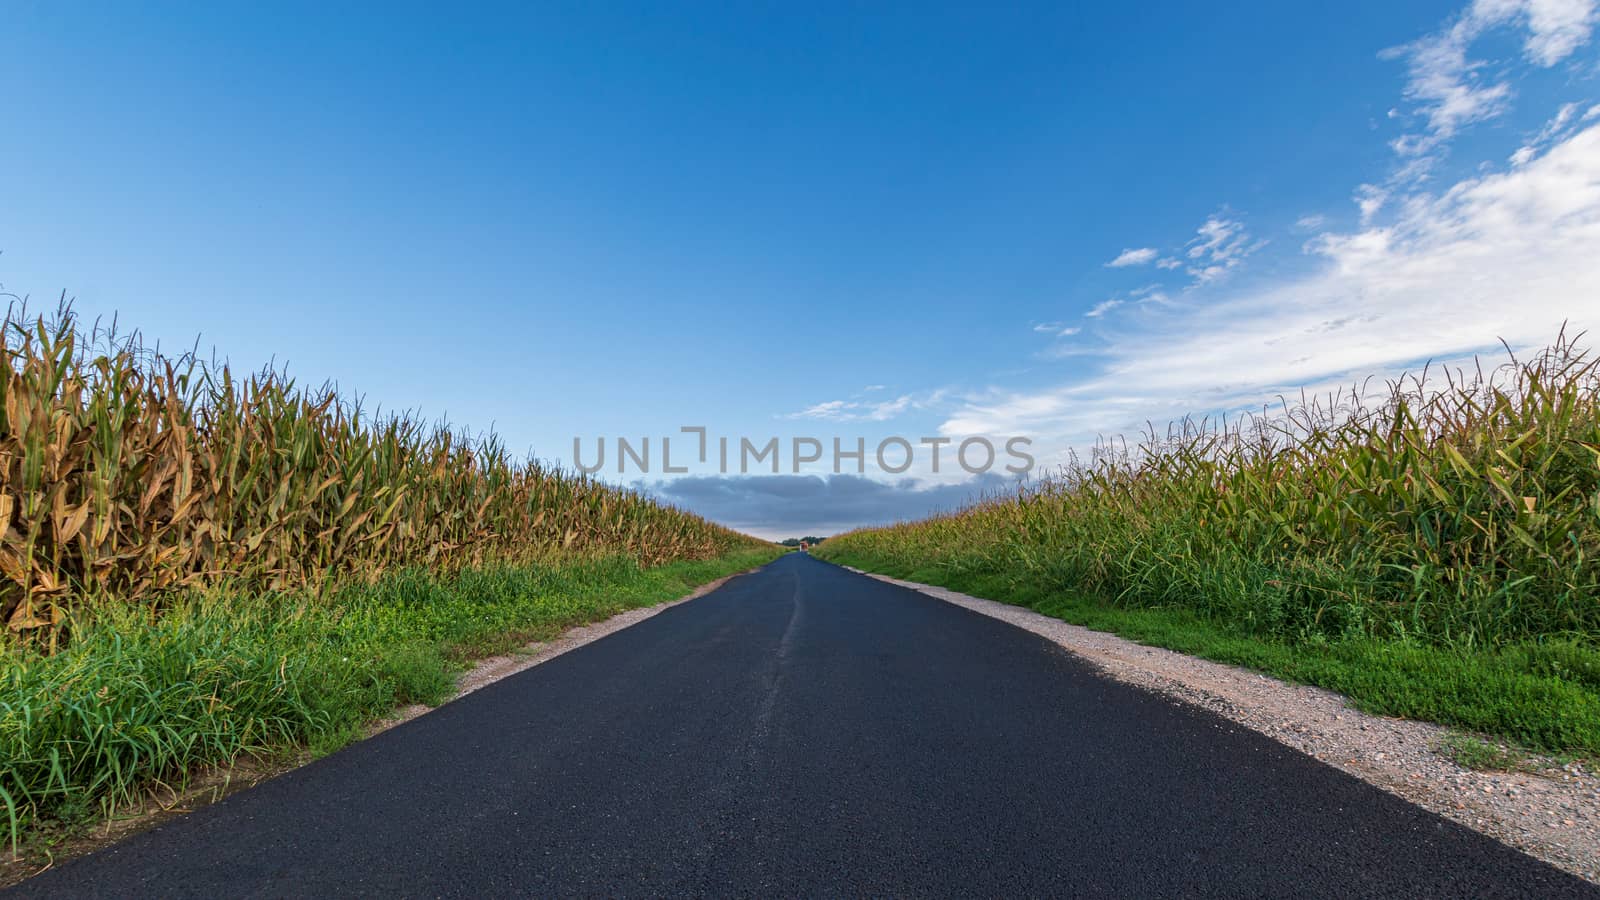 A long paved road runs towards the horizon passing three cornfields, landscape image